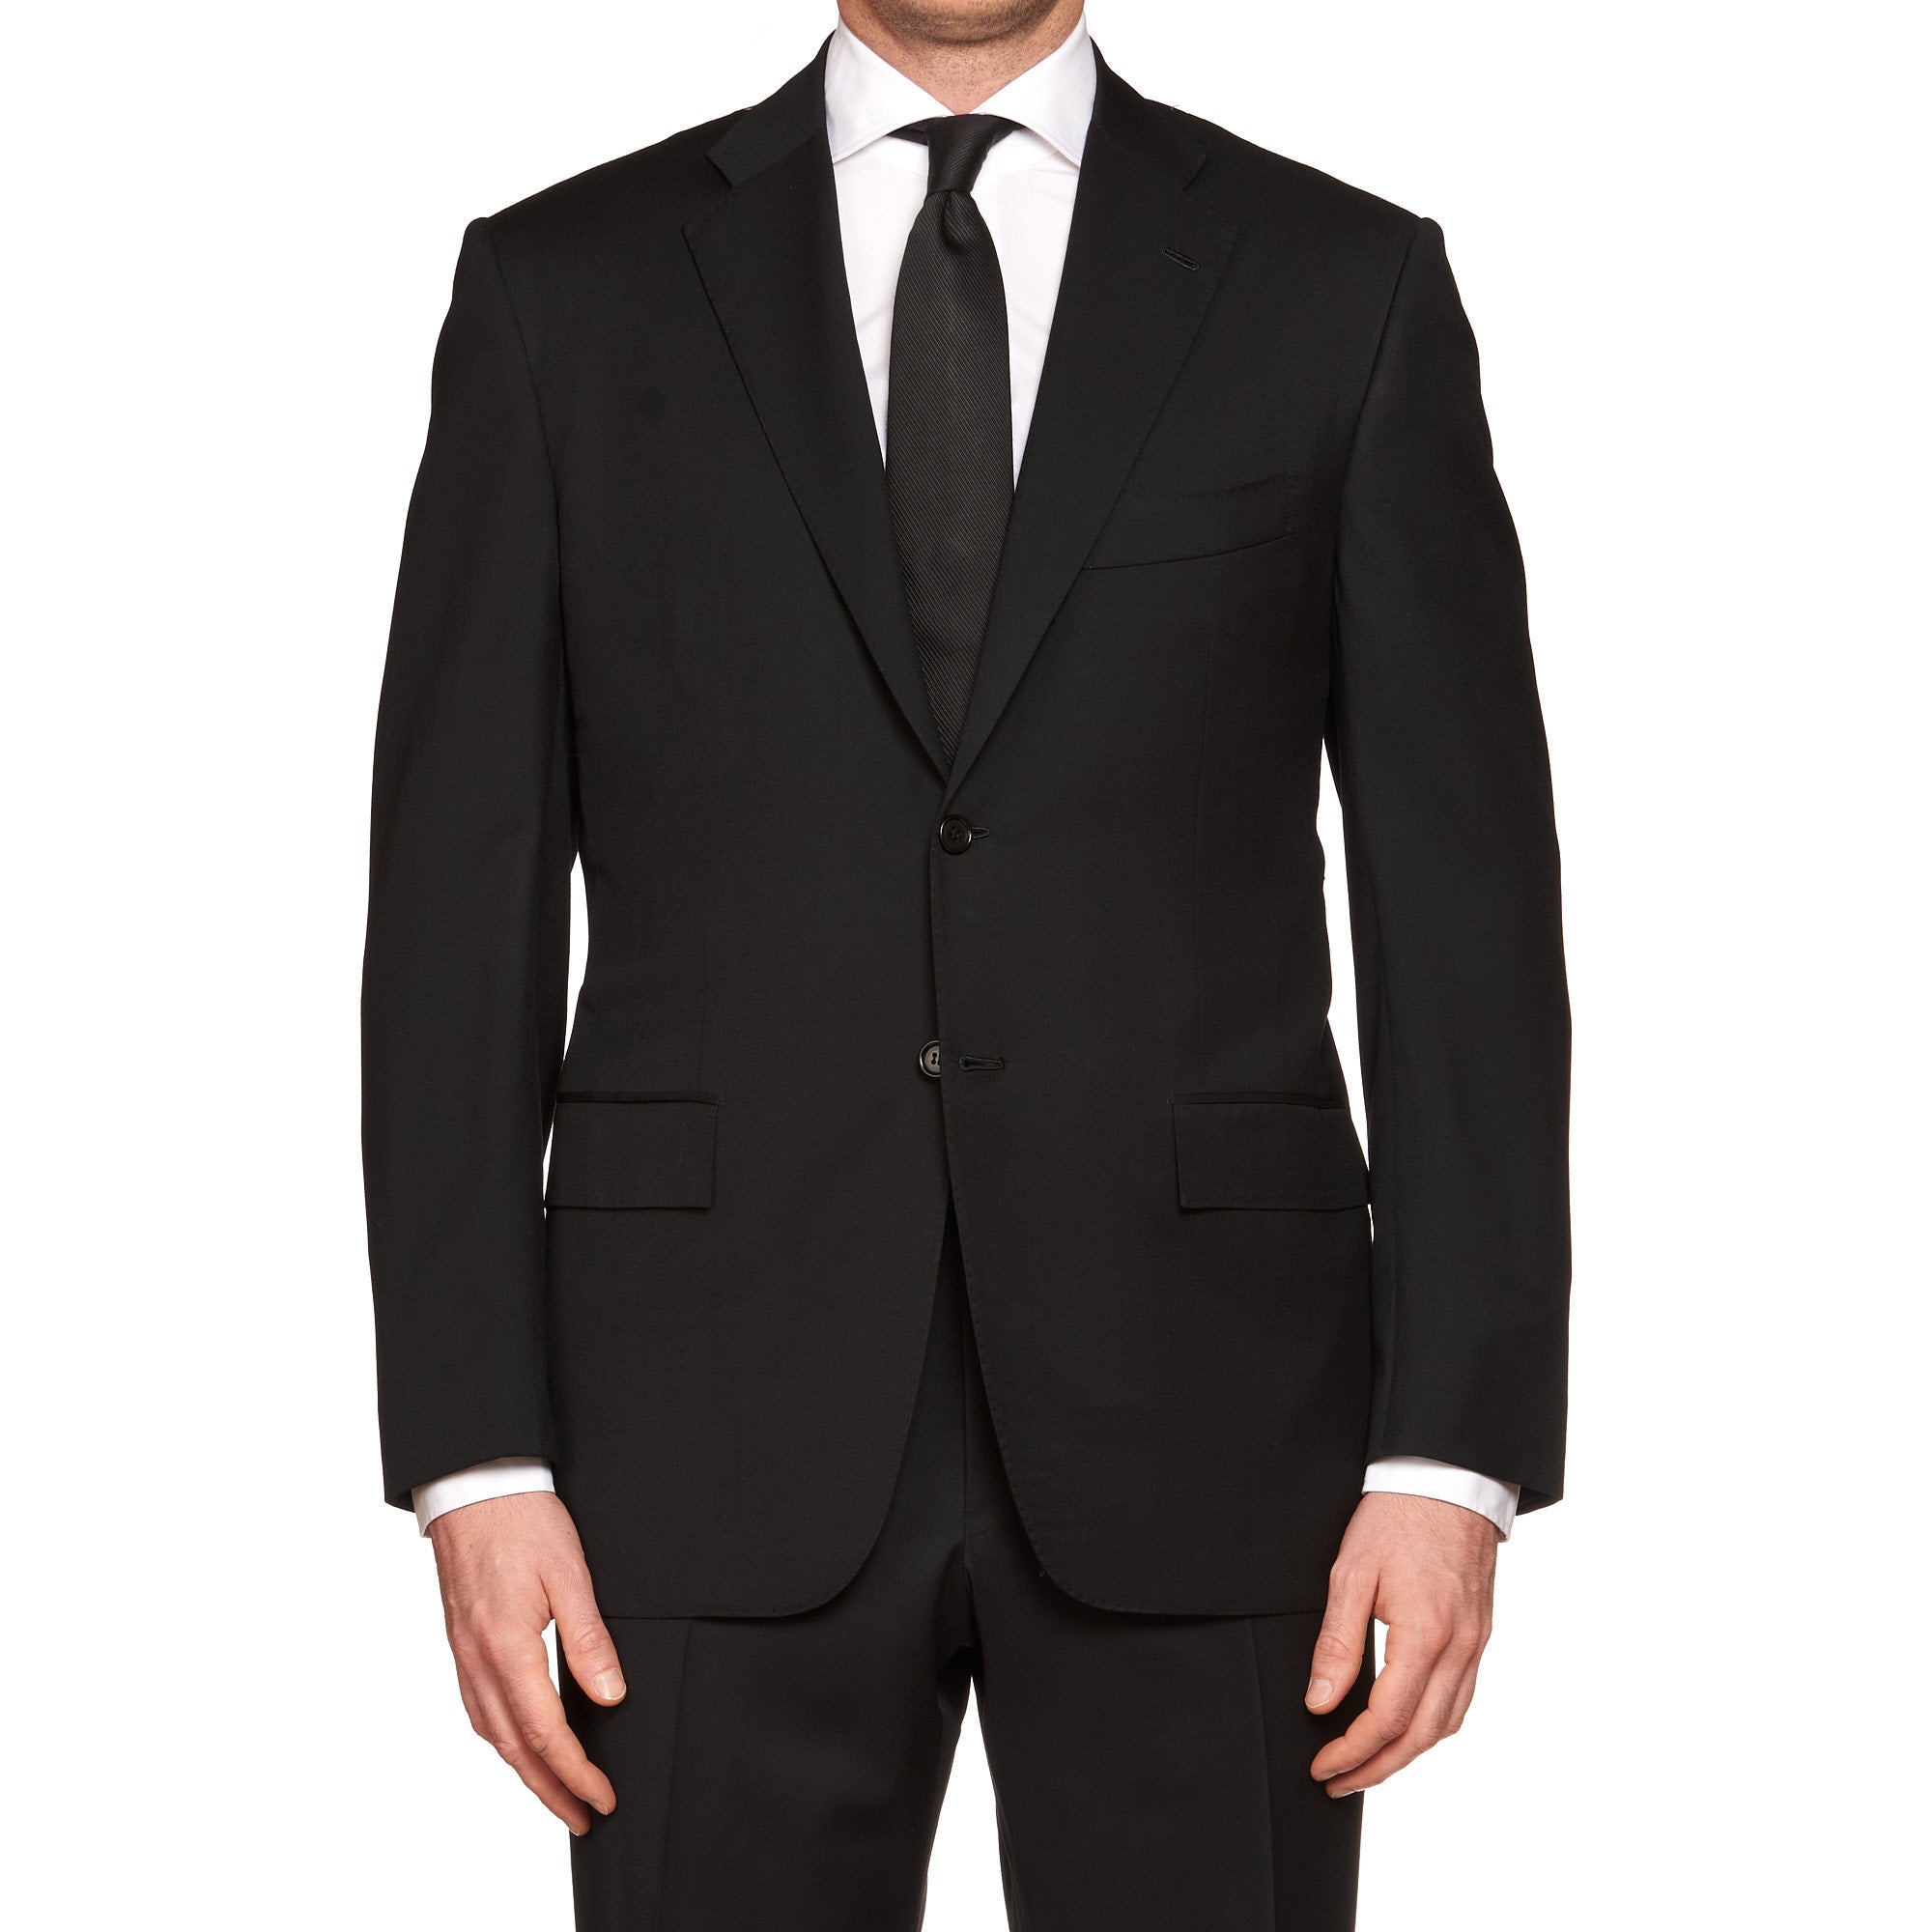 KITON Napoli for VANNUCCI Handmade Black Wool Elegant Suit EU 54 NEW US 44 Regular Fit KITON